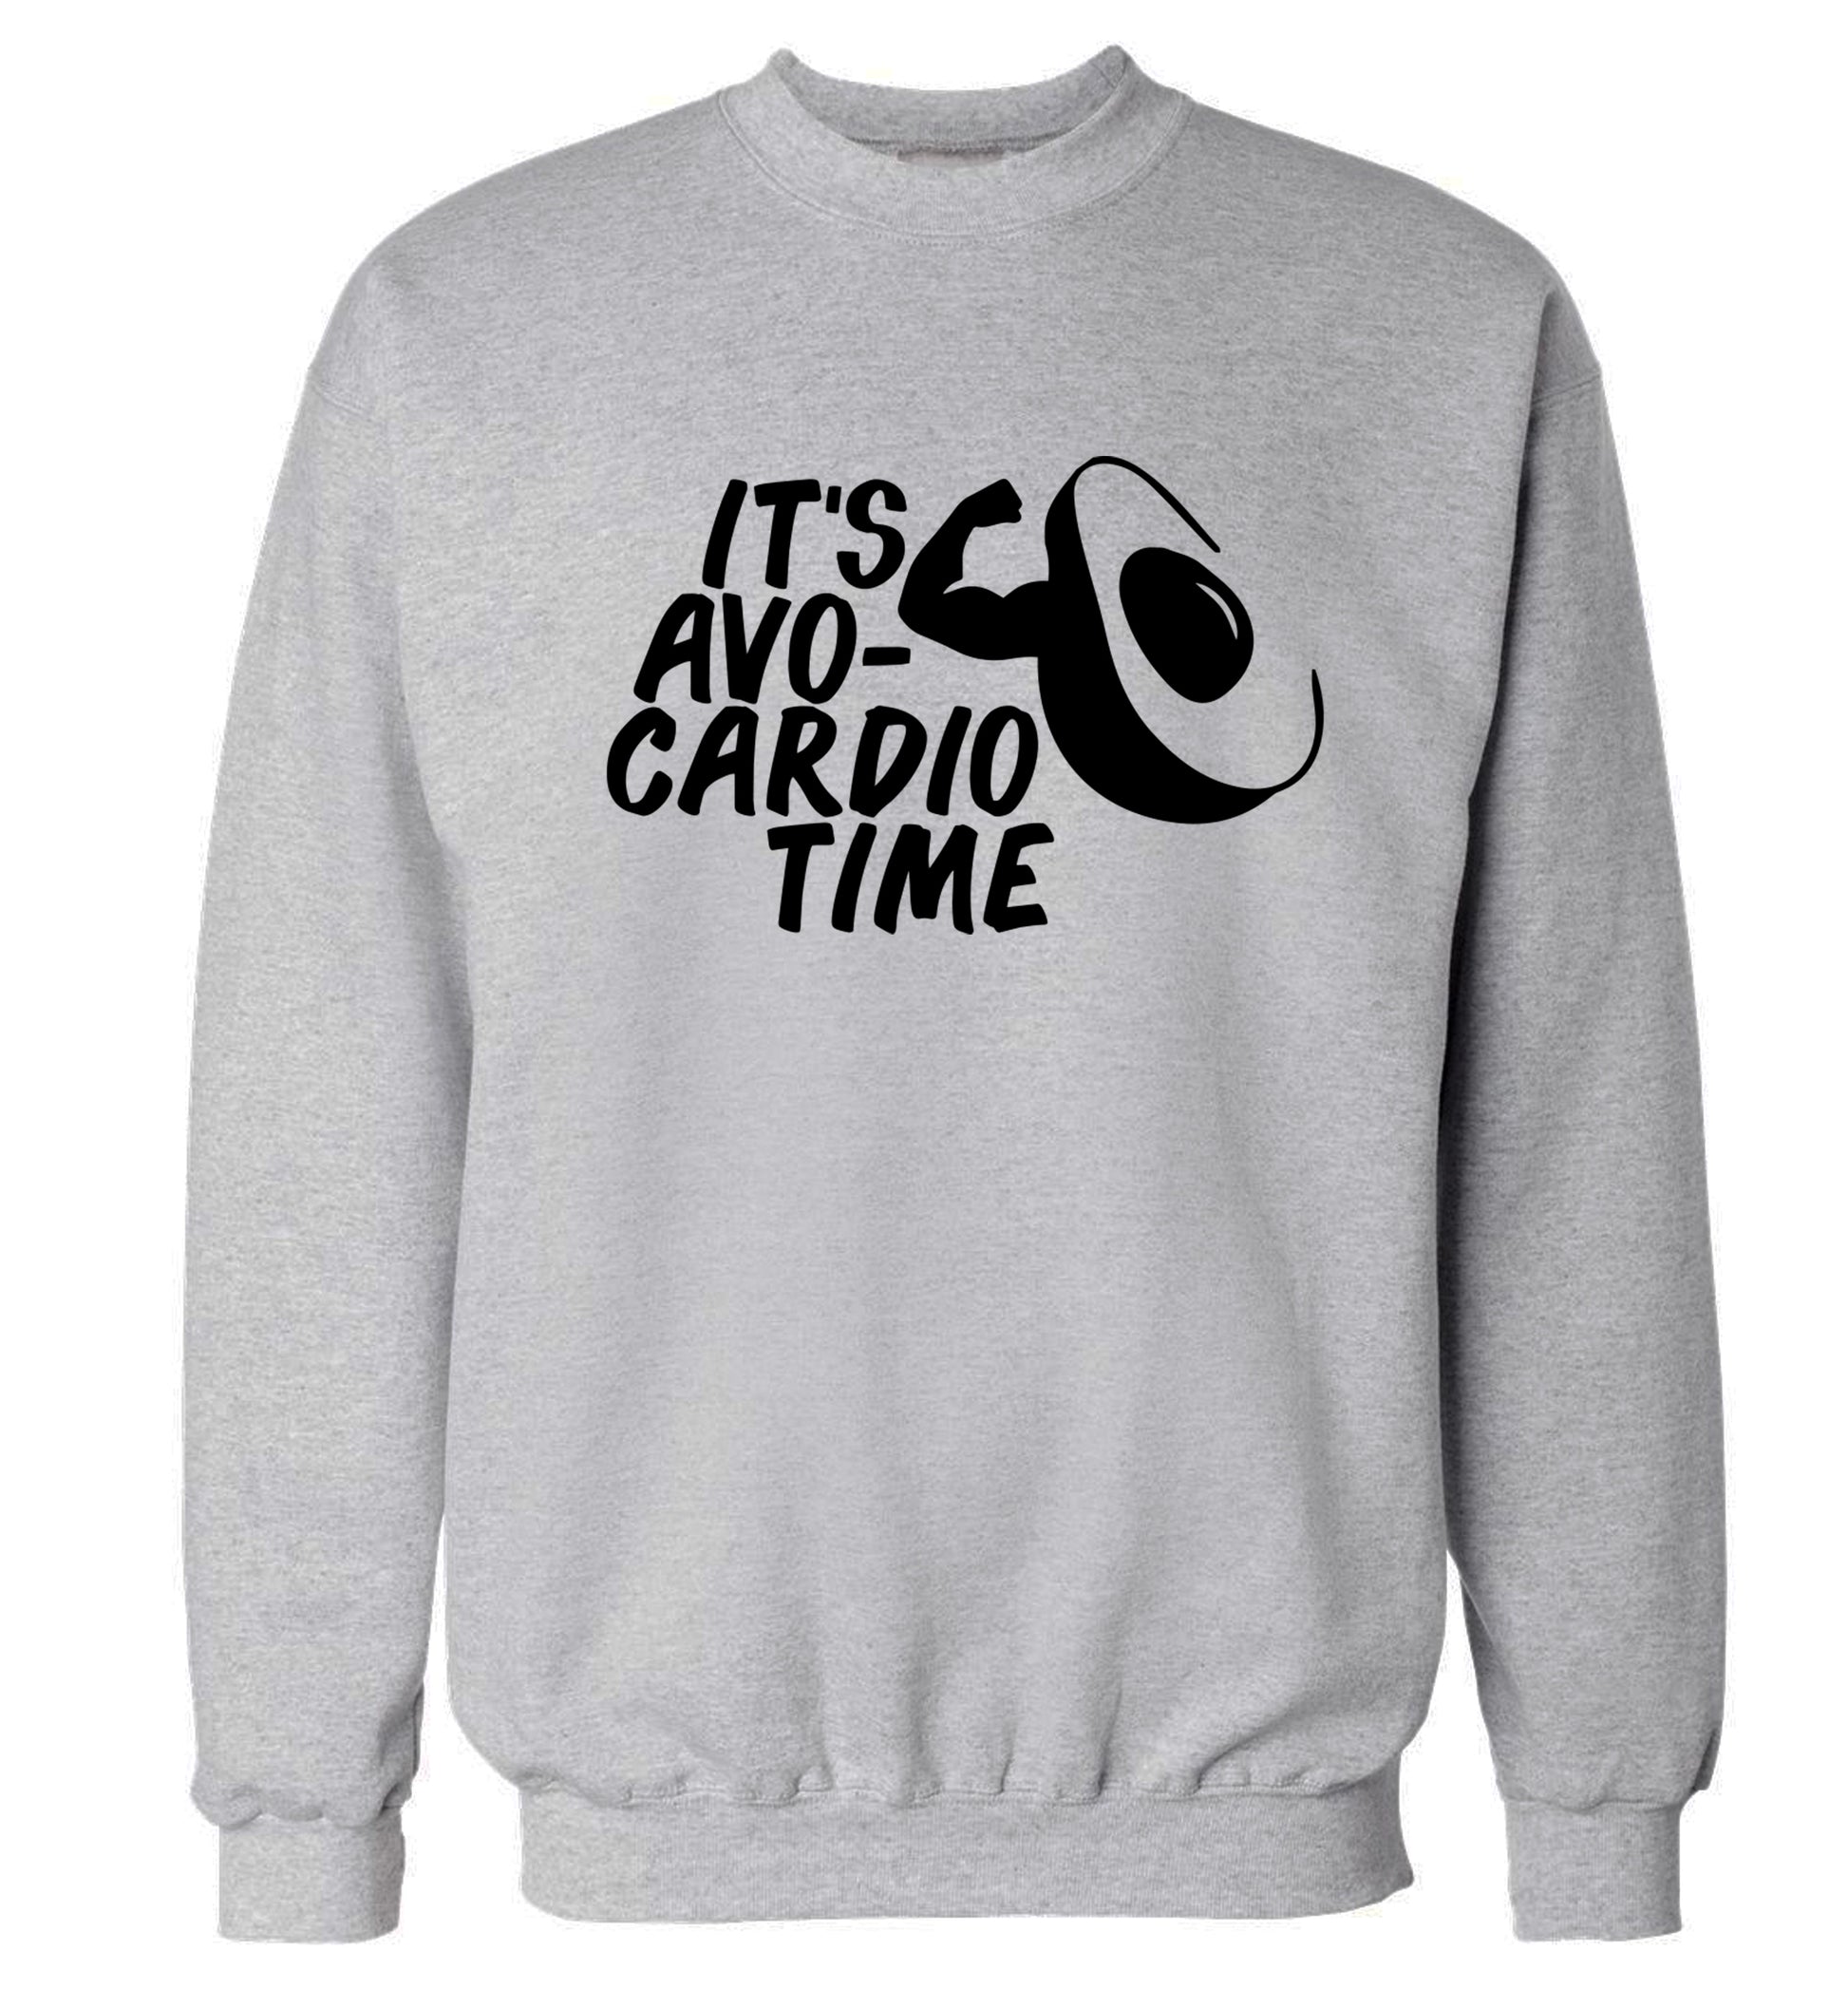 It's avo-cardio time Adult's unisex grey Sweater 2XL